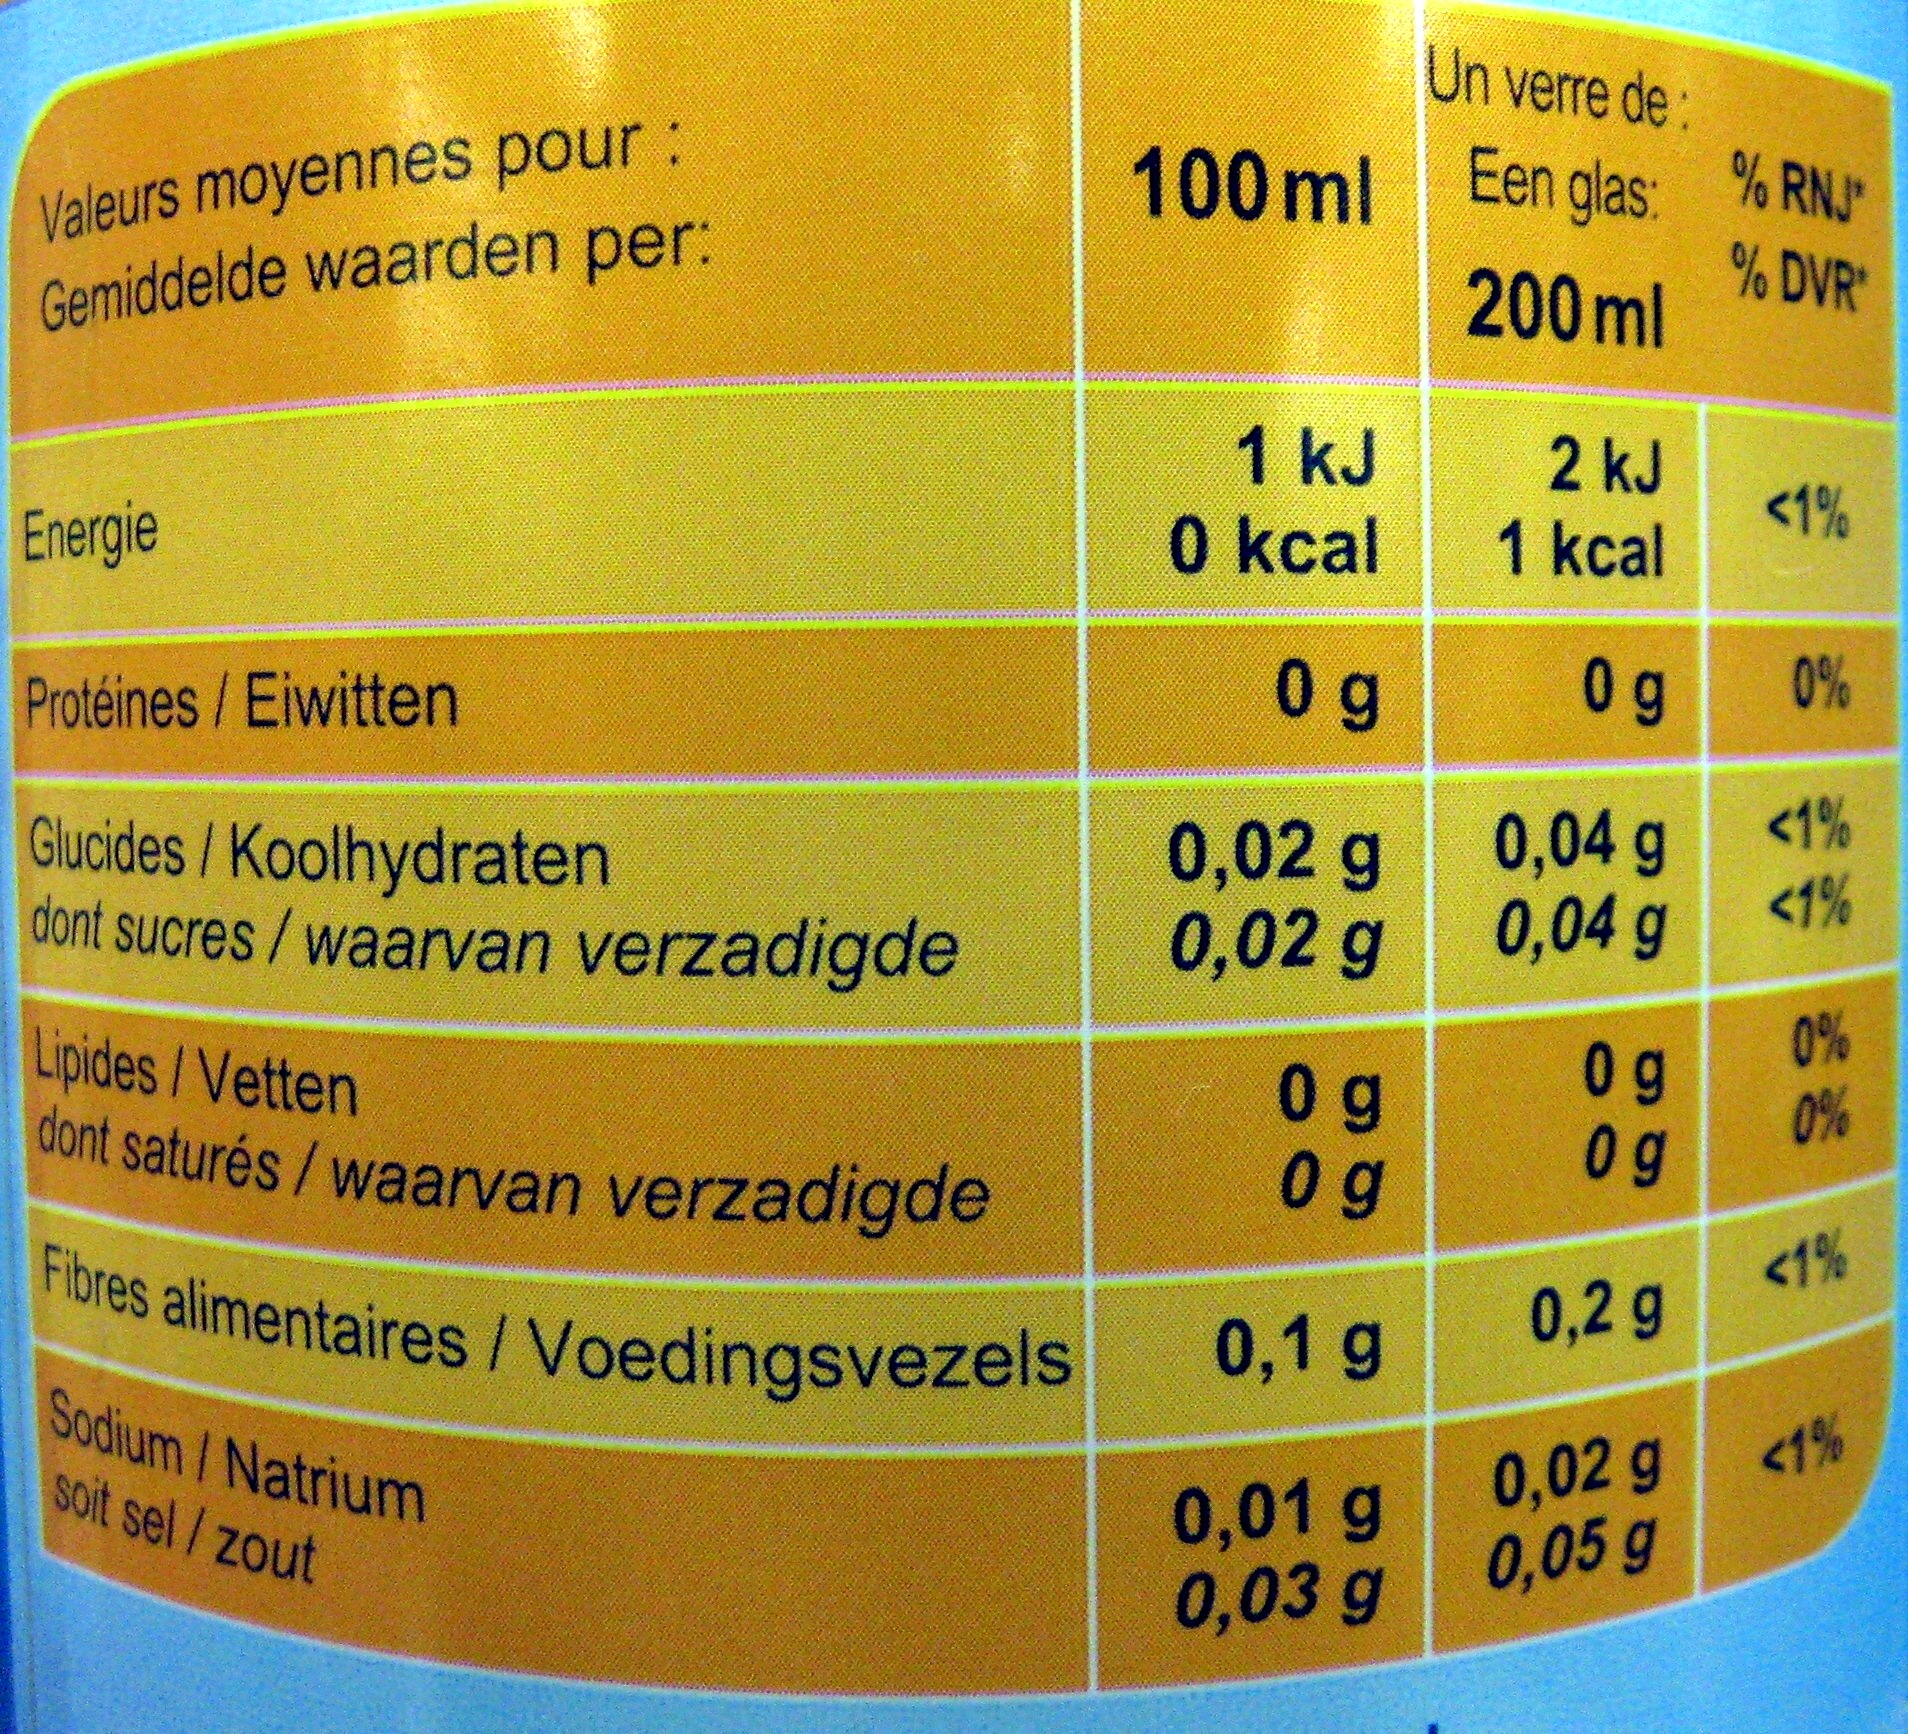 Limonade zero* - Tableau nutritionnel